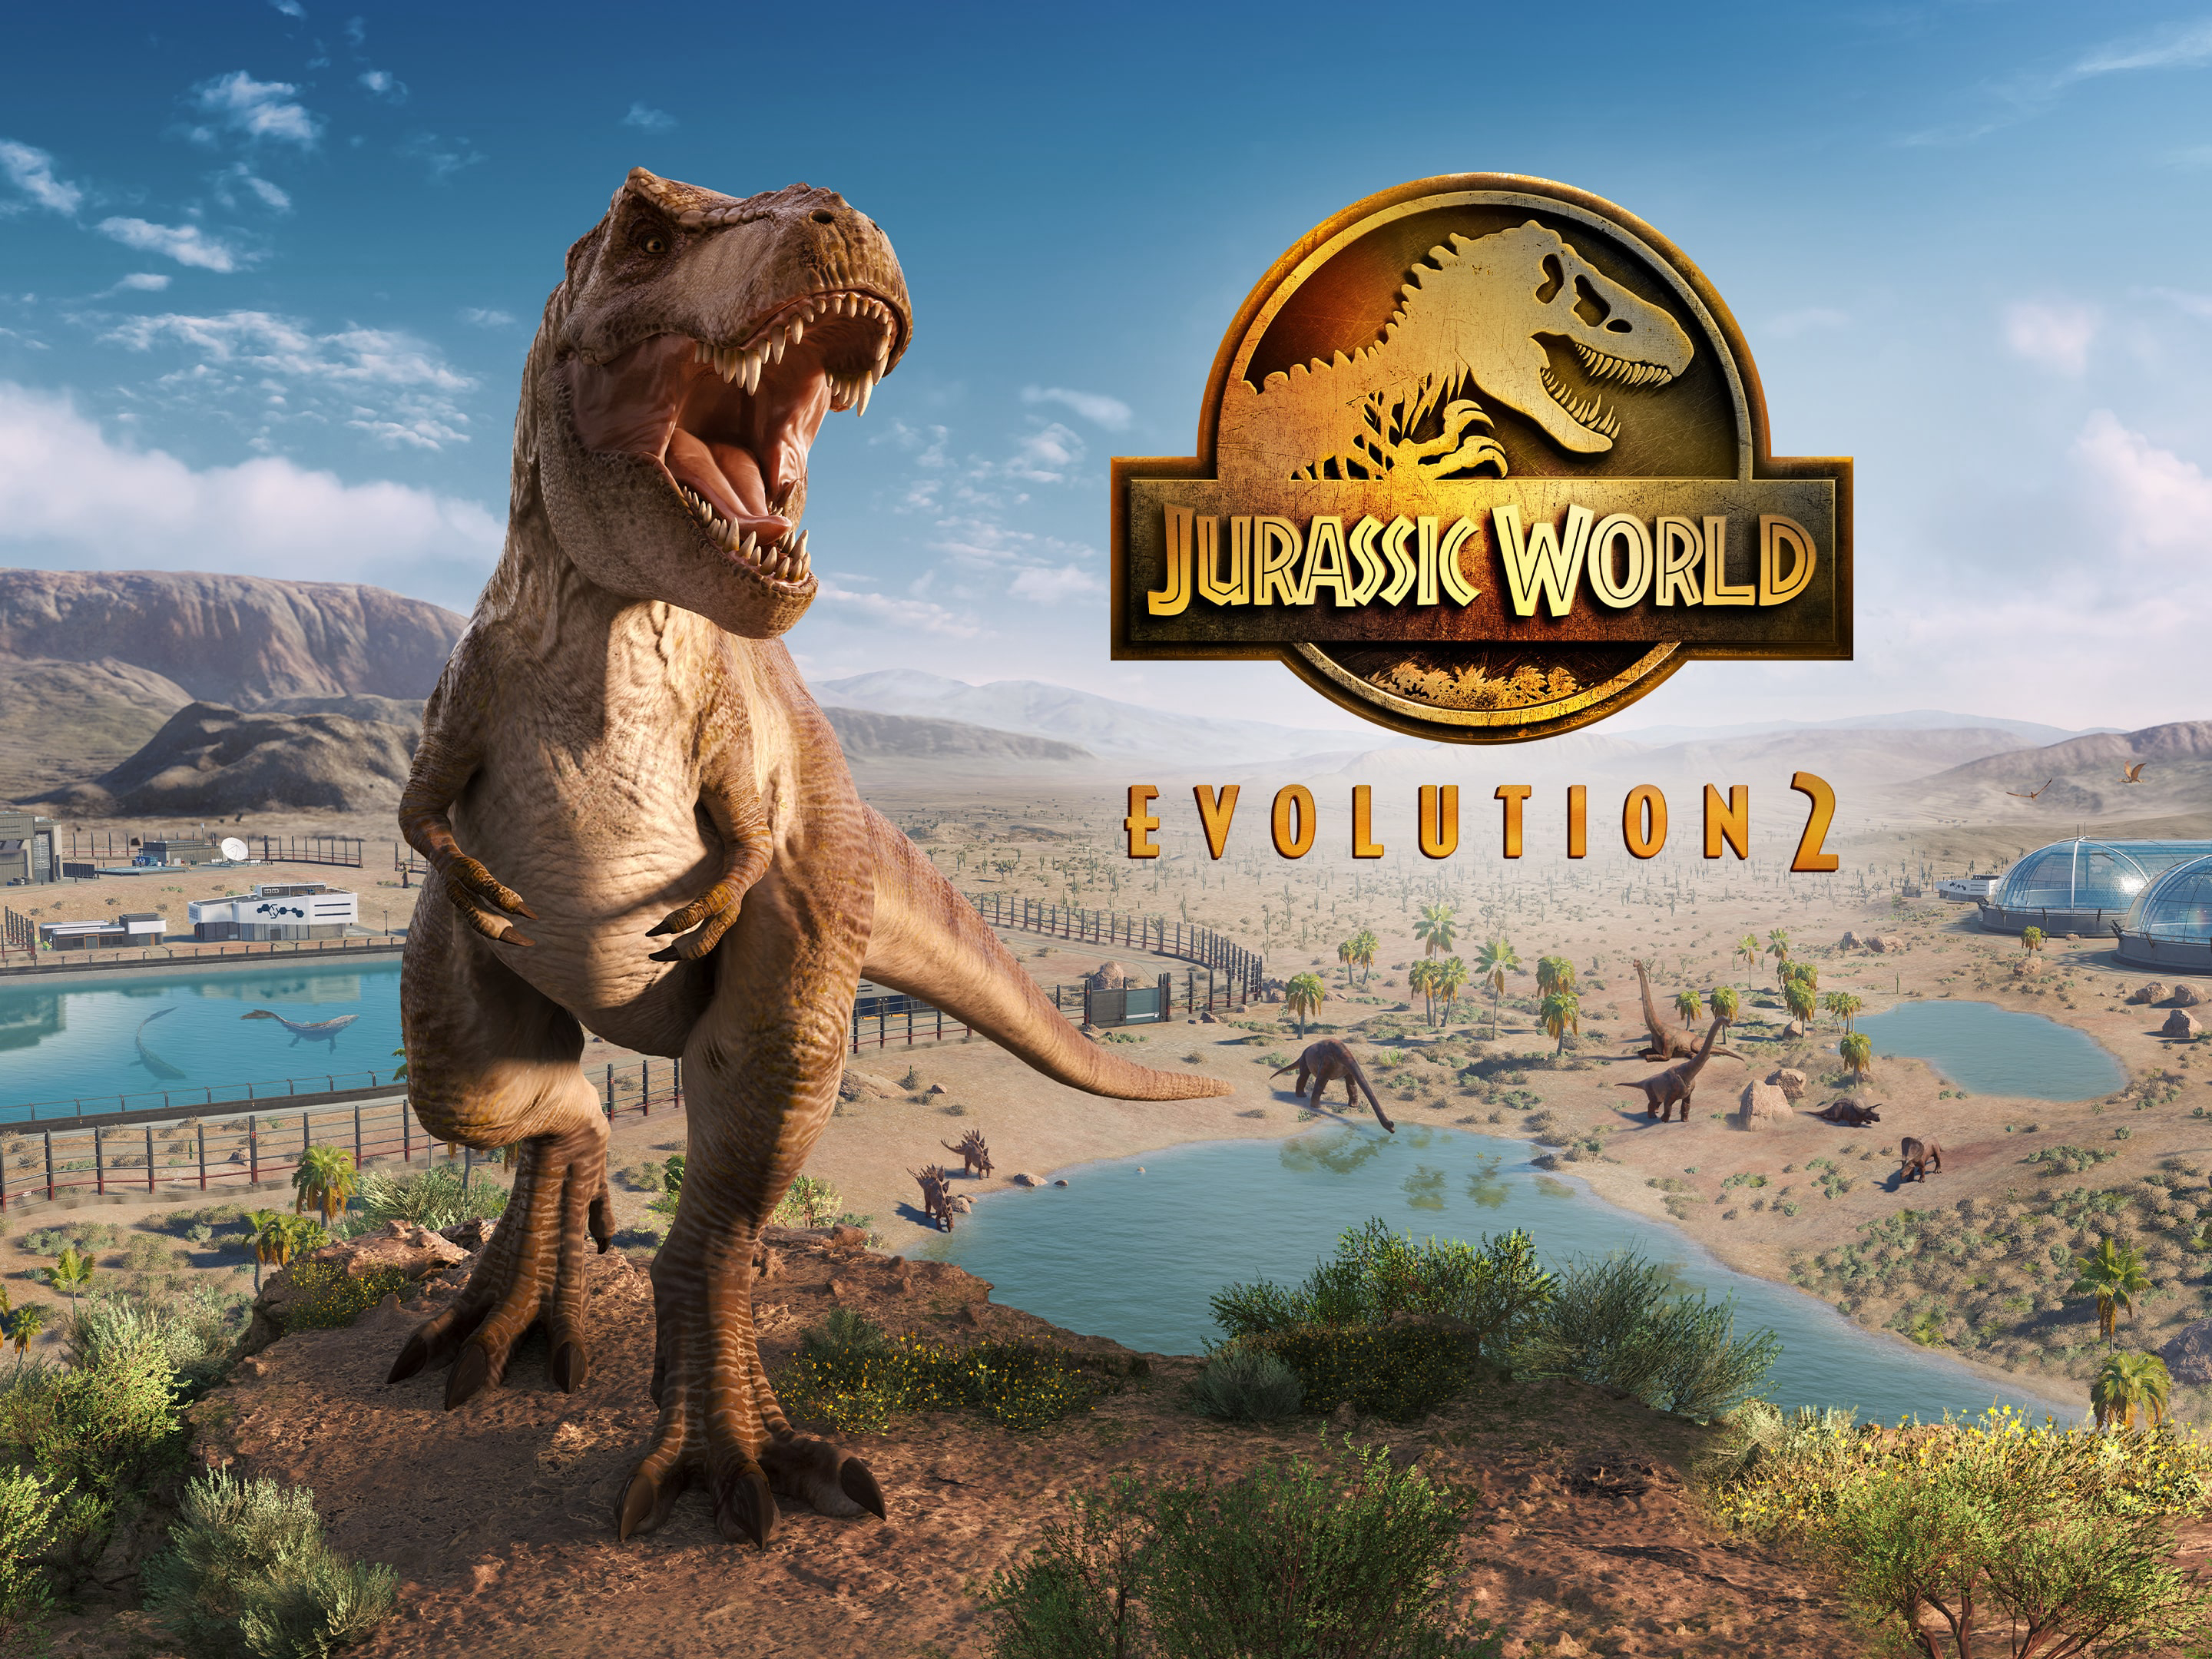 Jurassic World / Jurassic World (2015)